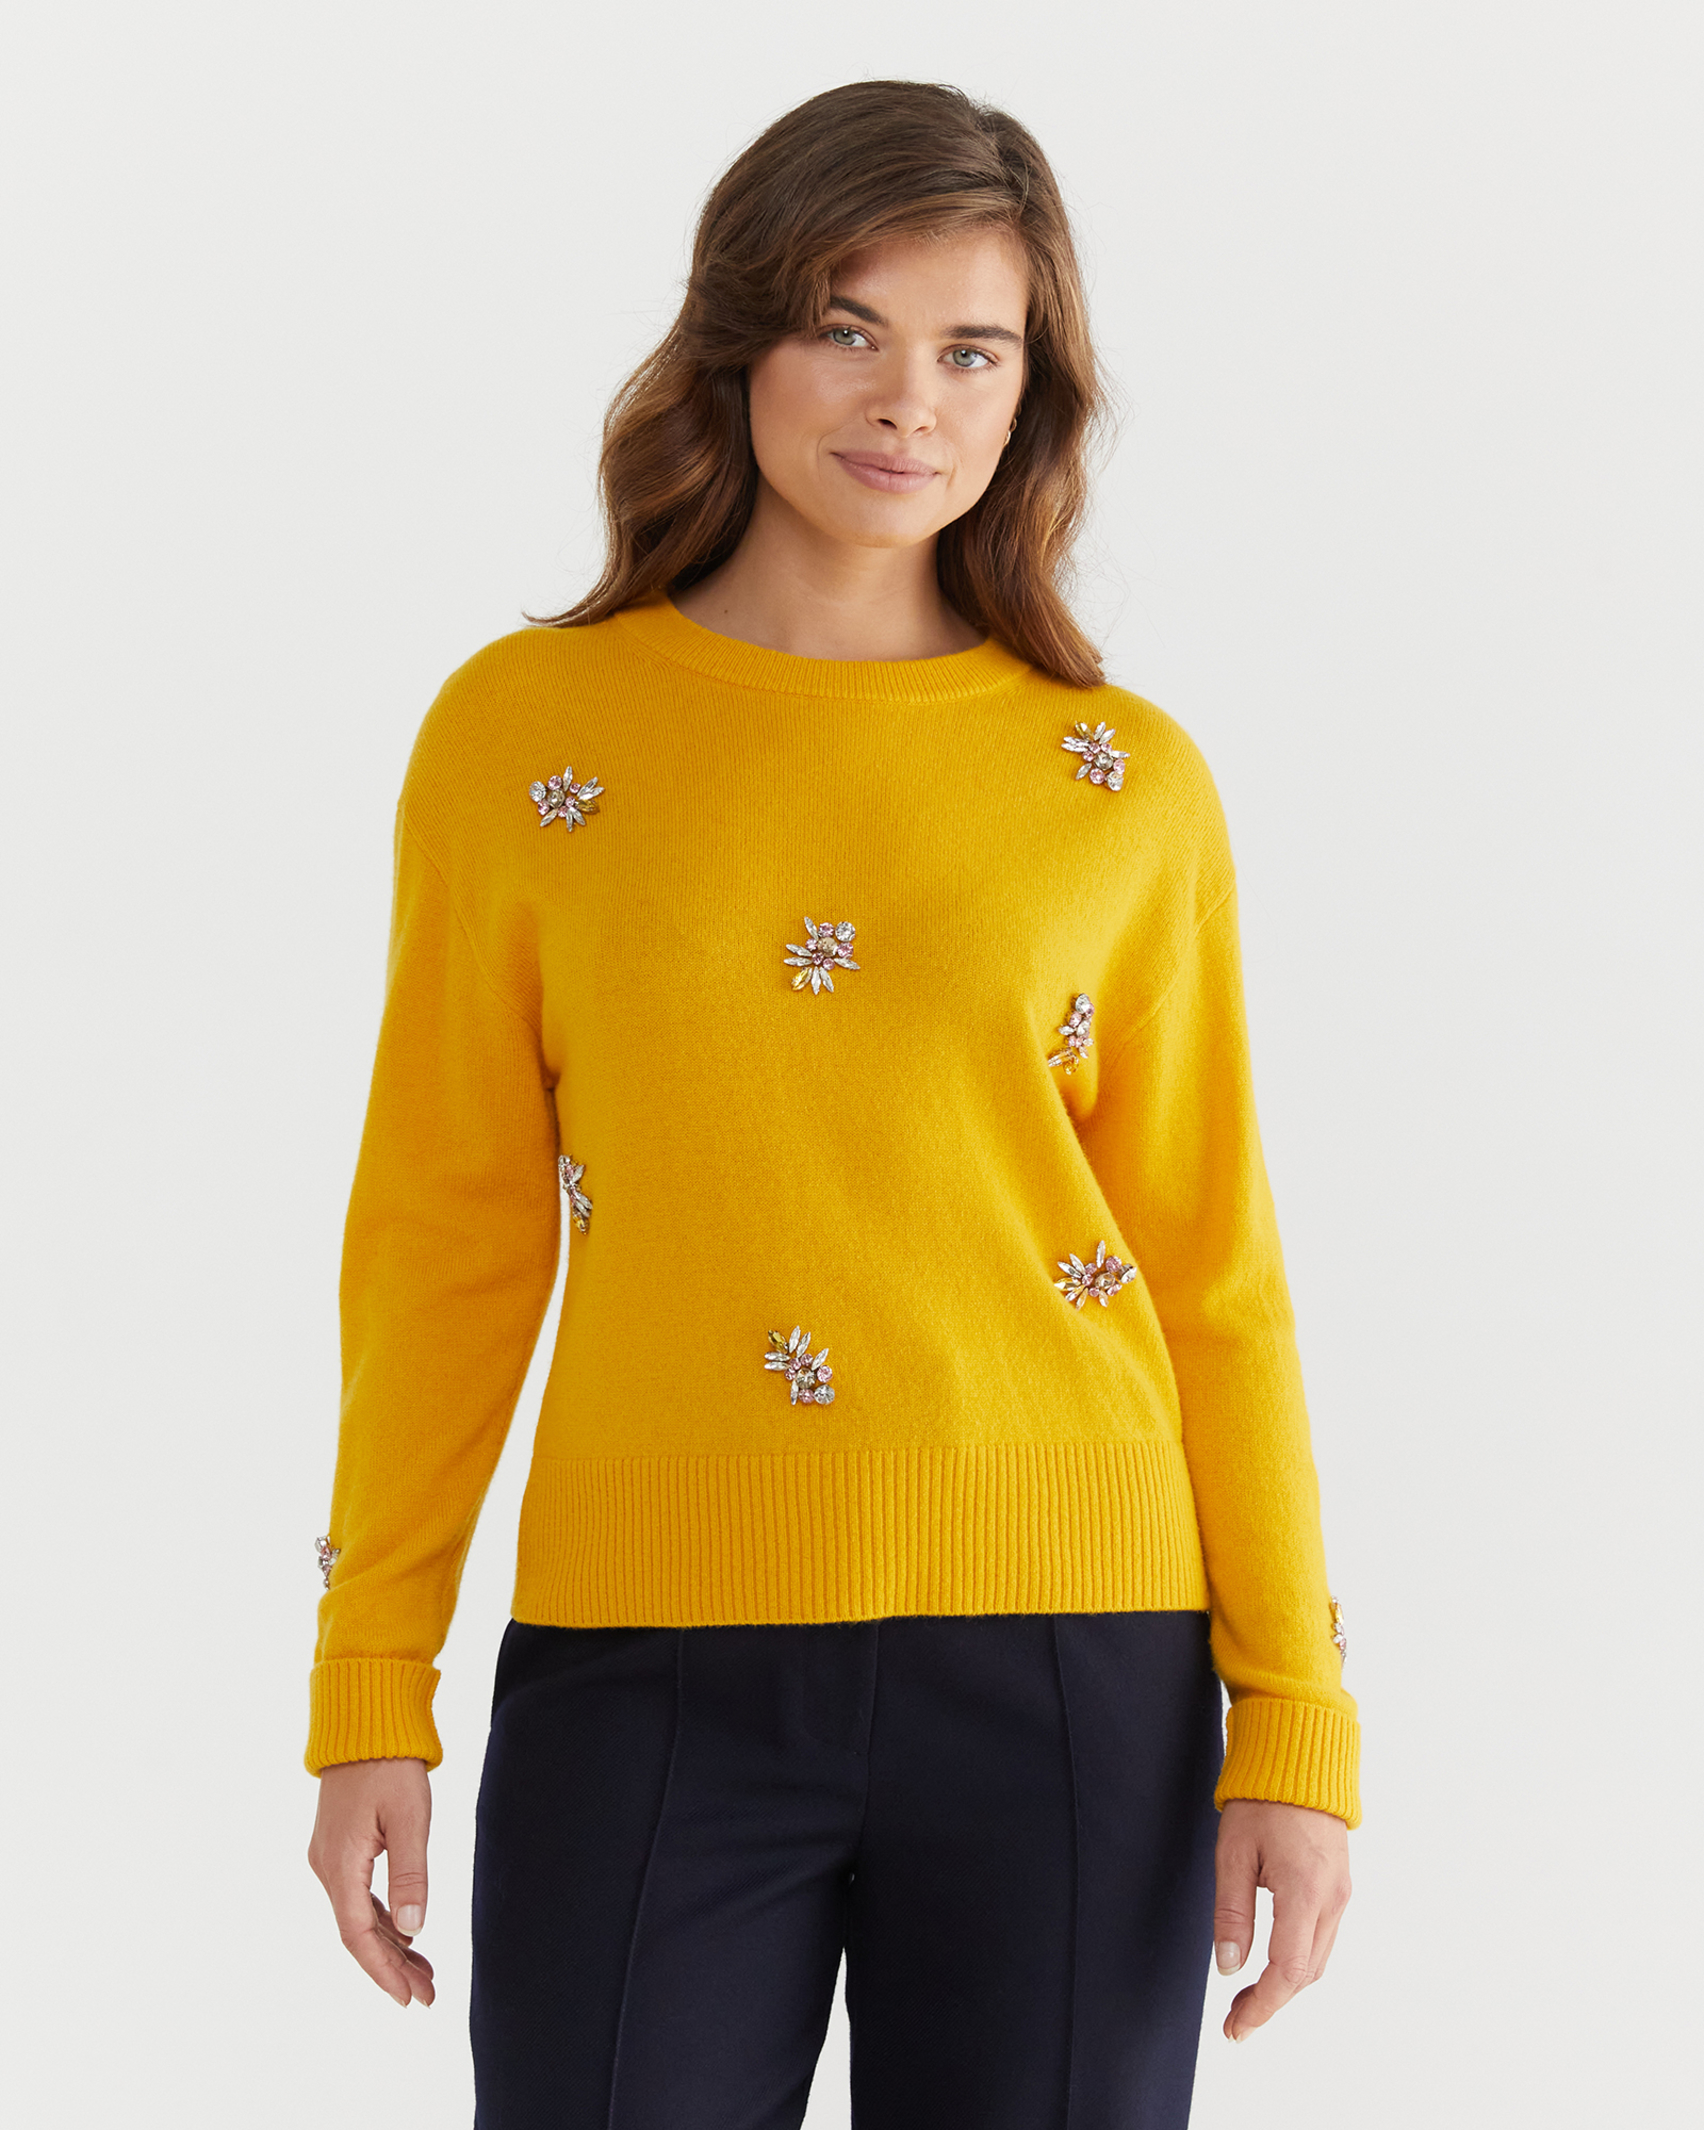 Sunshine Embellished Sweater in HONEY GOLD